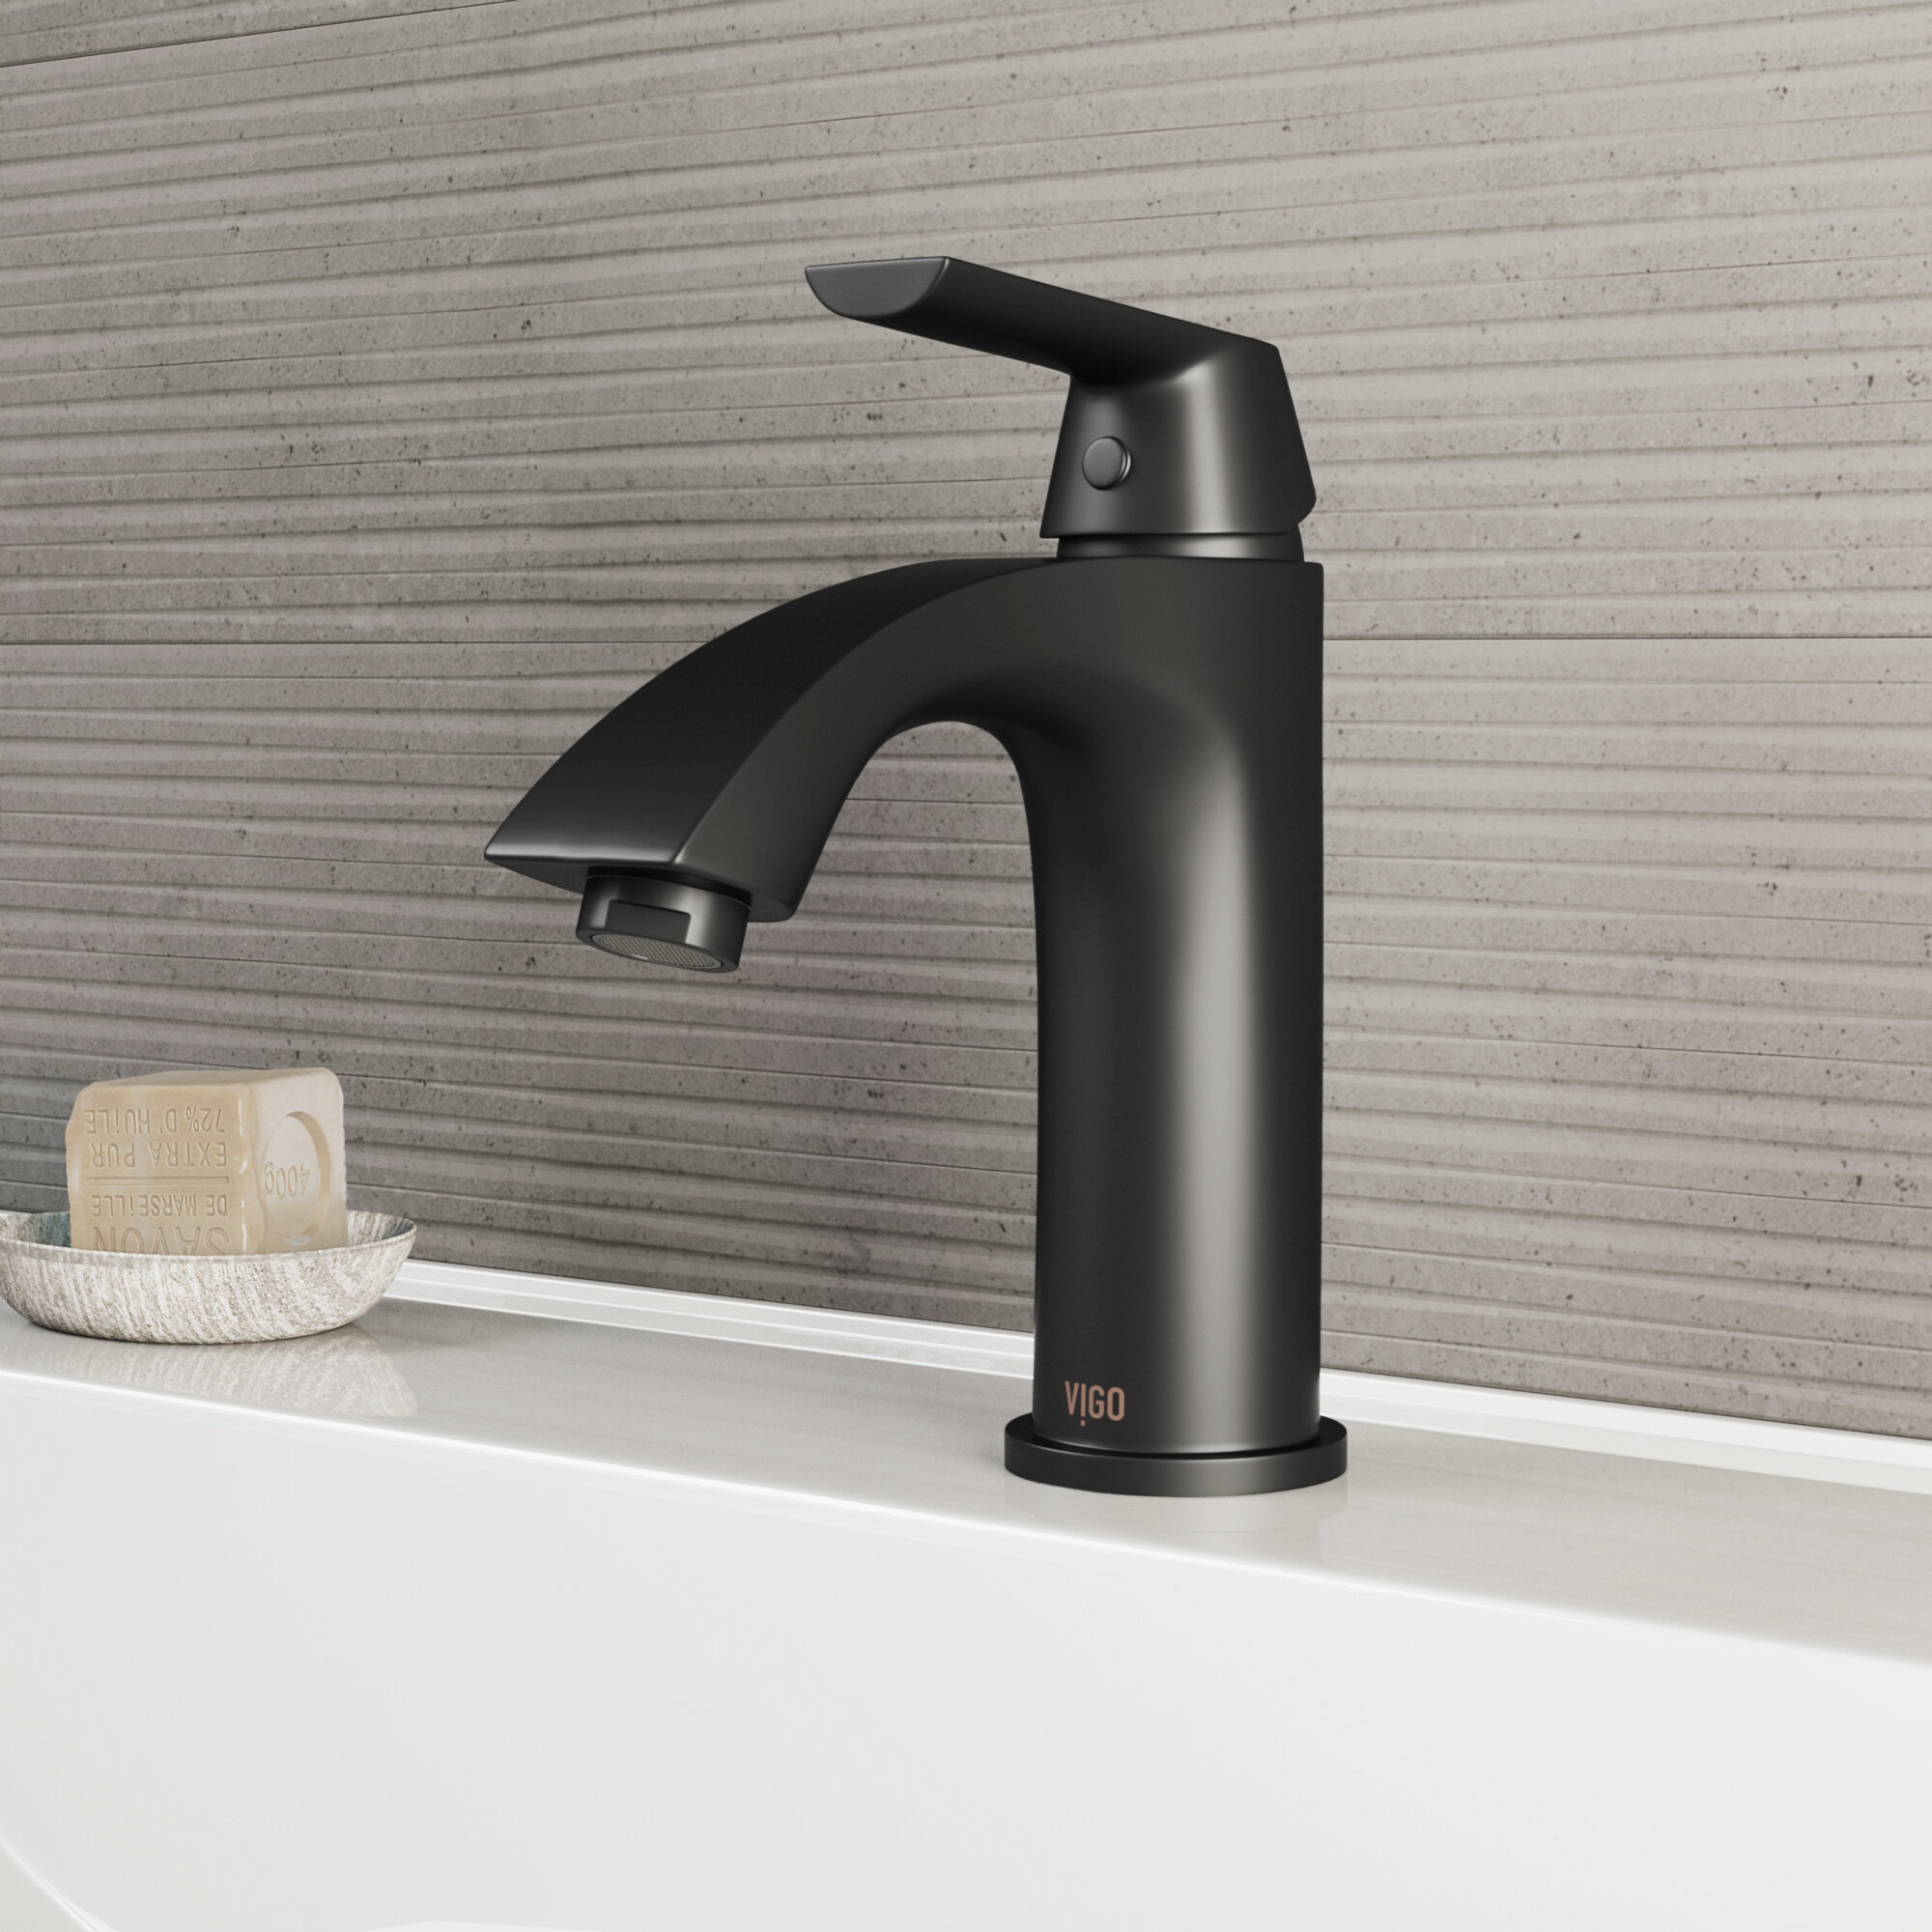 Vigo Penela Single Hole Bathroom Faucet Reviews Wayfair